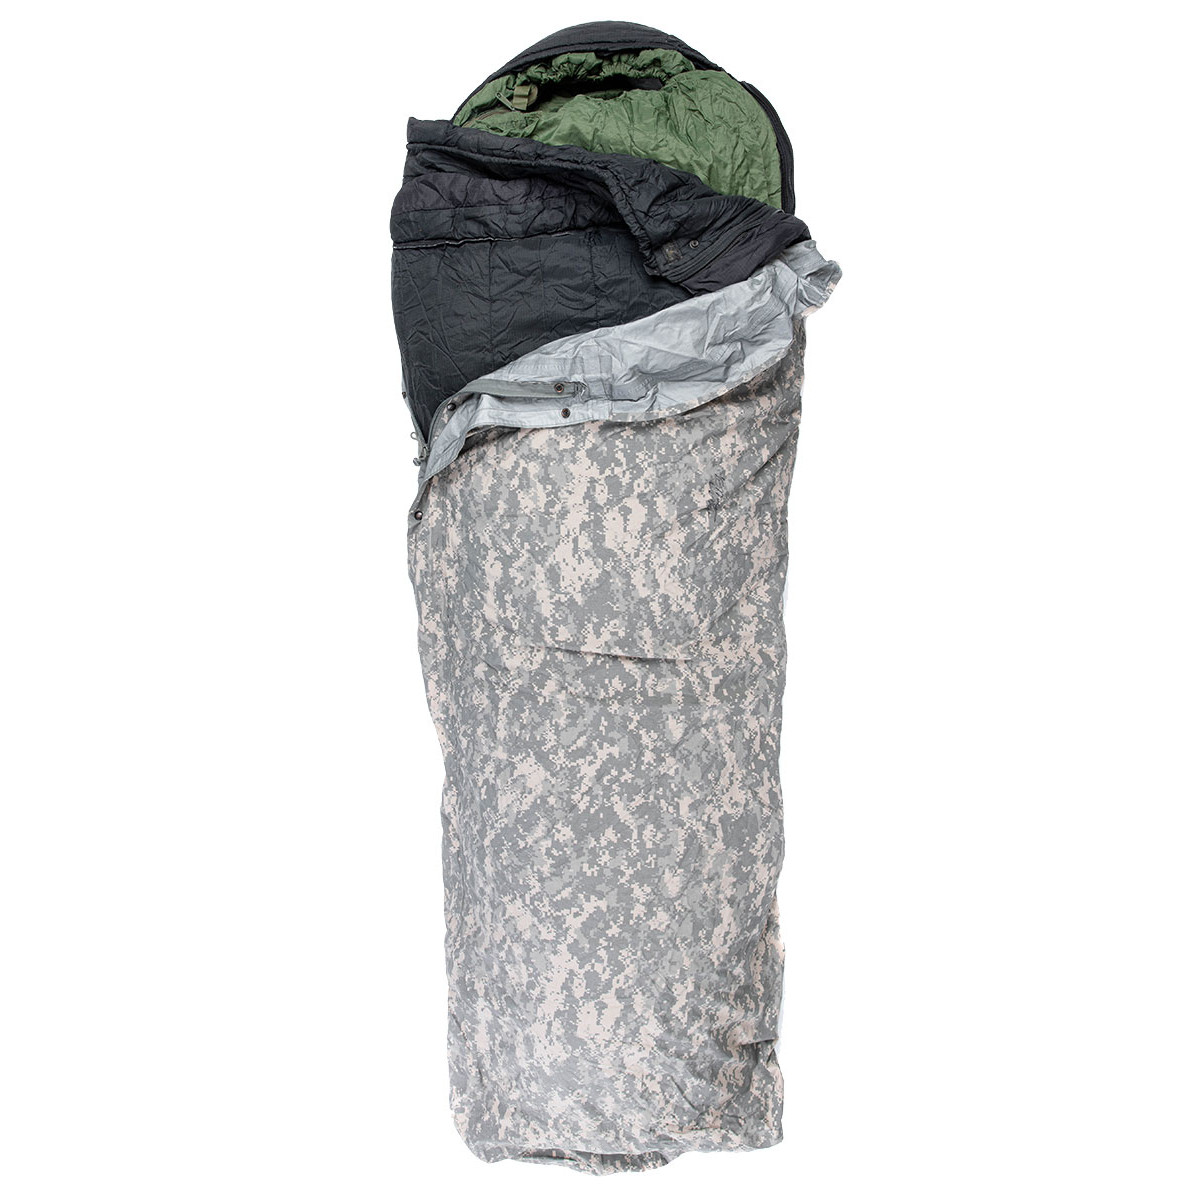 US IMSS Modular Sleeping Bag System, black/green, w. UCP Gore-Tex cover ...